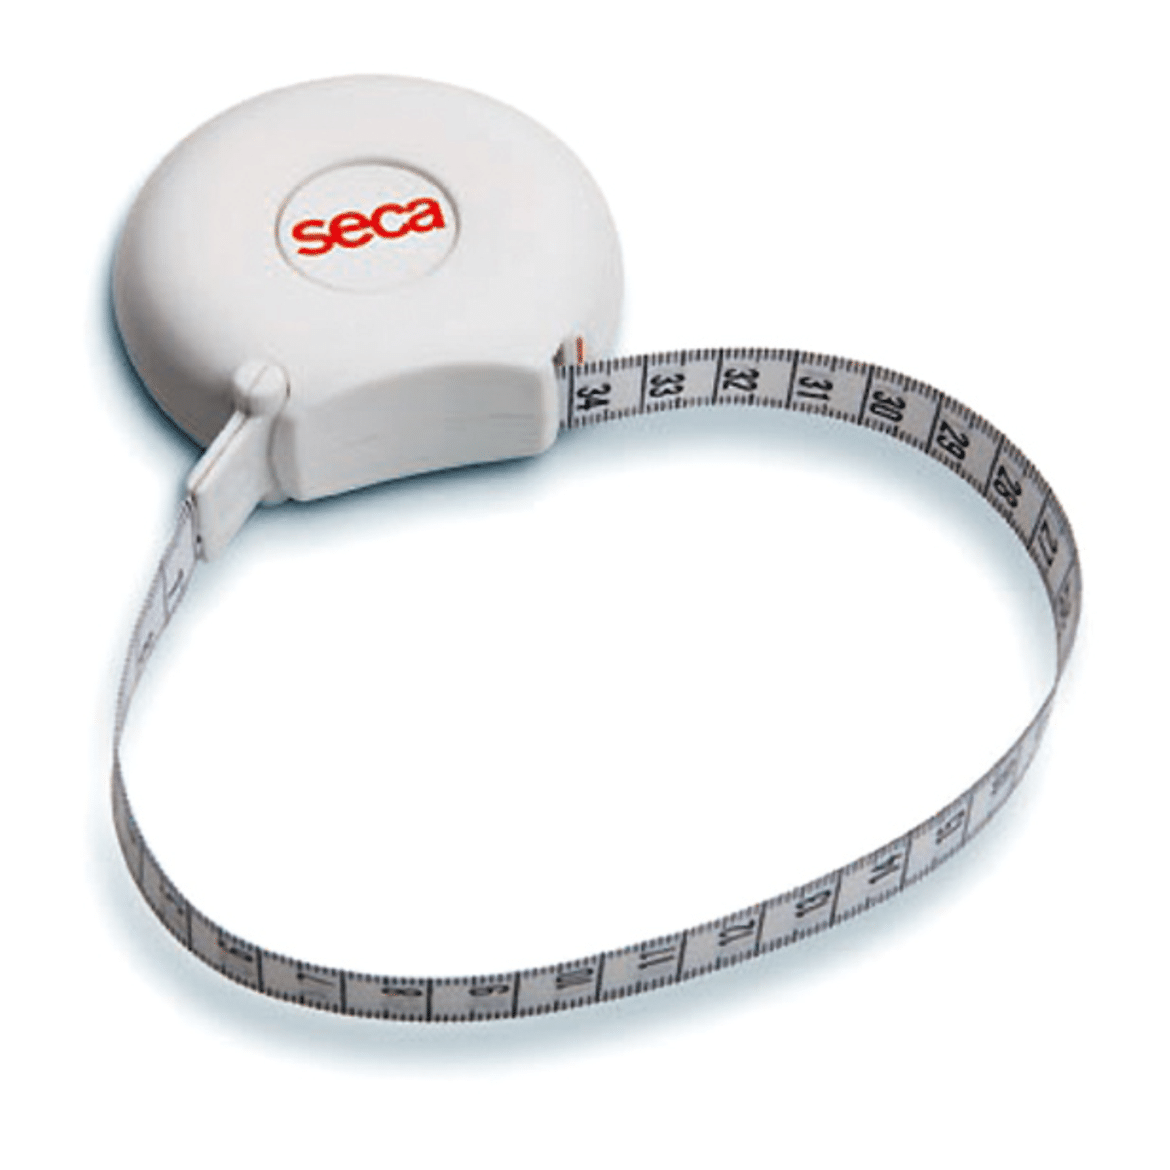 Pediatric Measuring Tape by Seca 